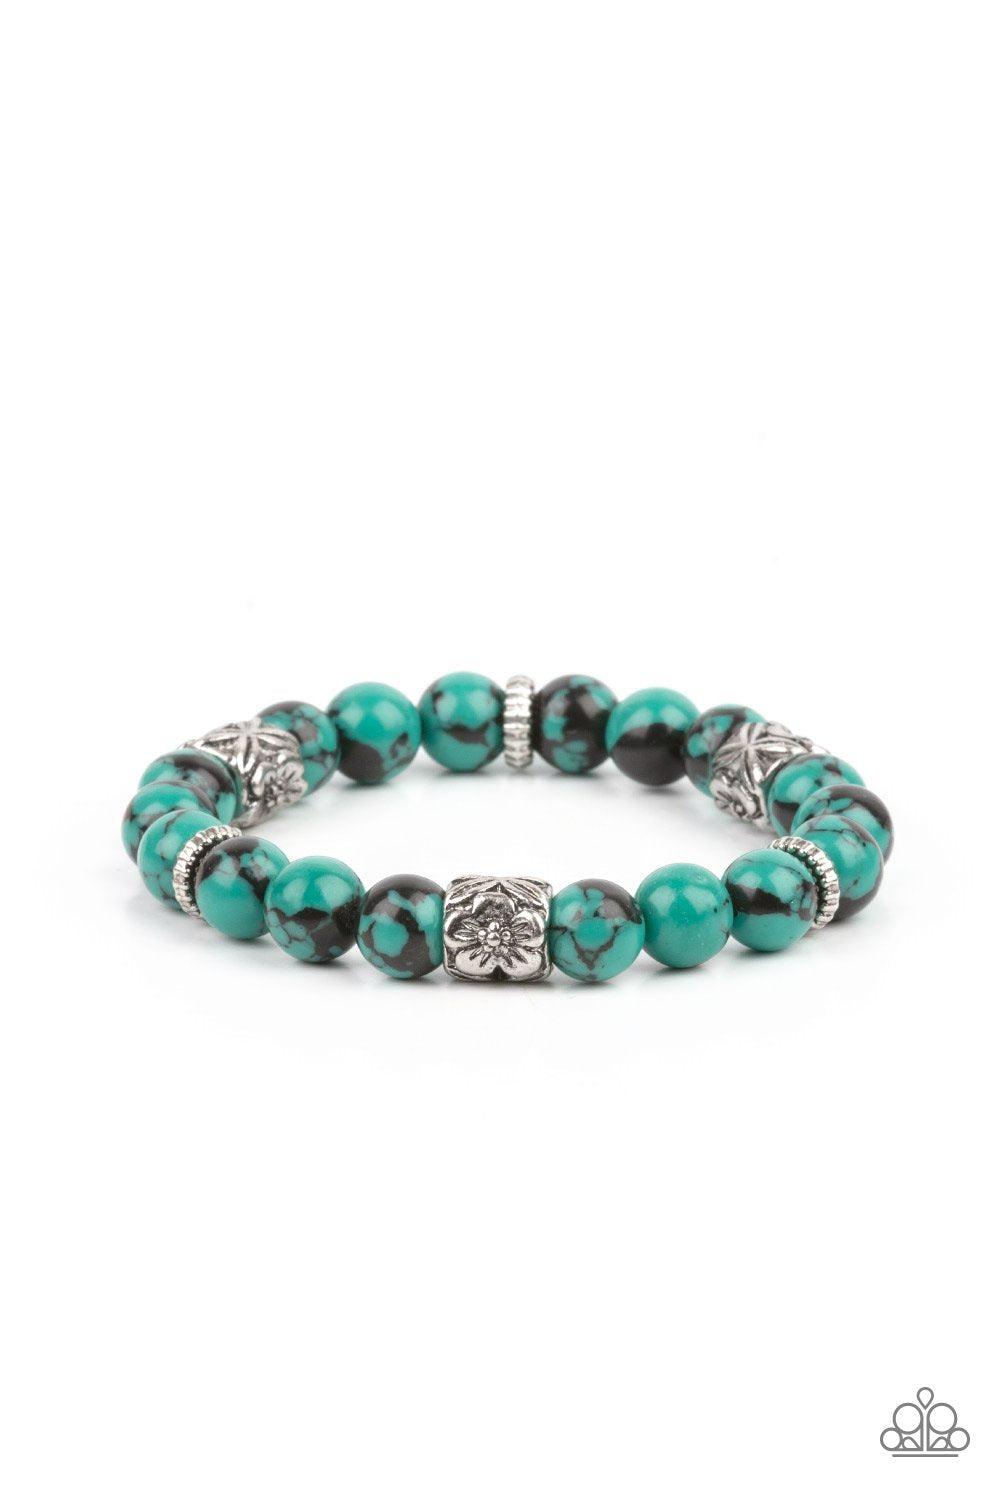 Garden Zen Green and Black Bracelet - Paparazzi Accessories- lightbox - CarasShop.com - $5 Jewelry by Cara Jewels